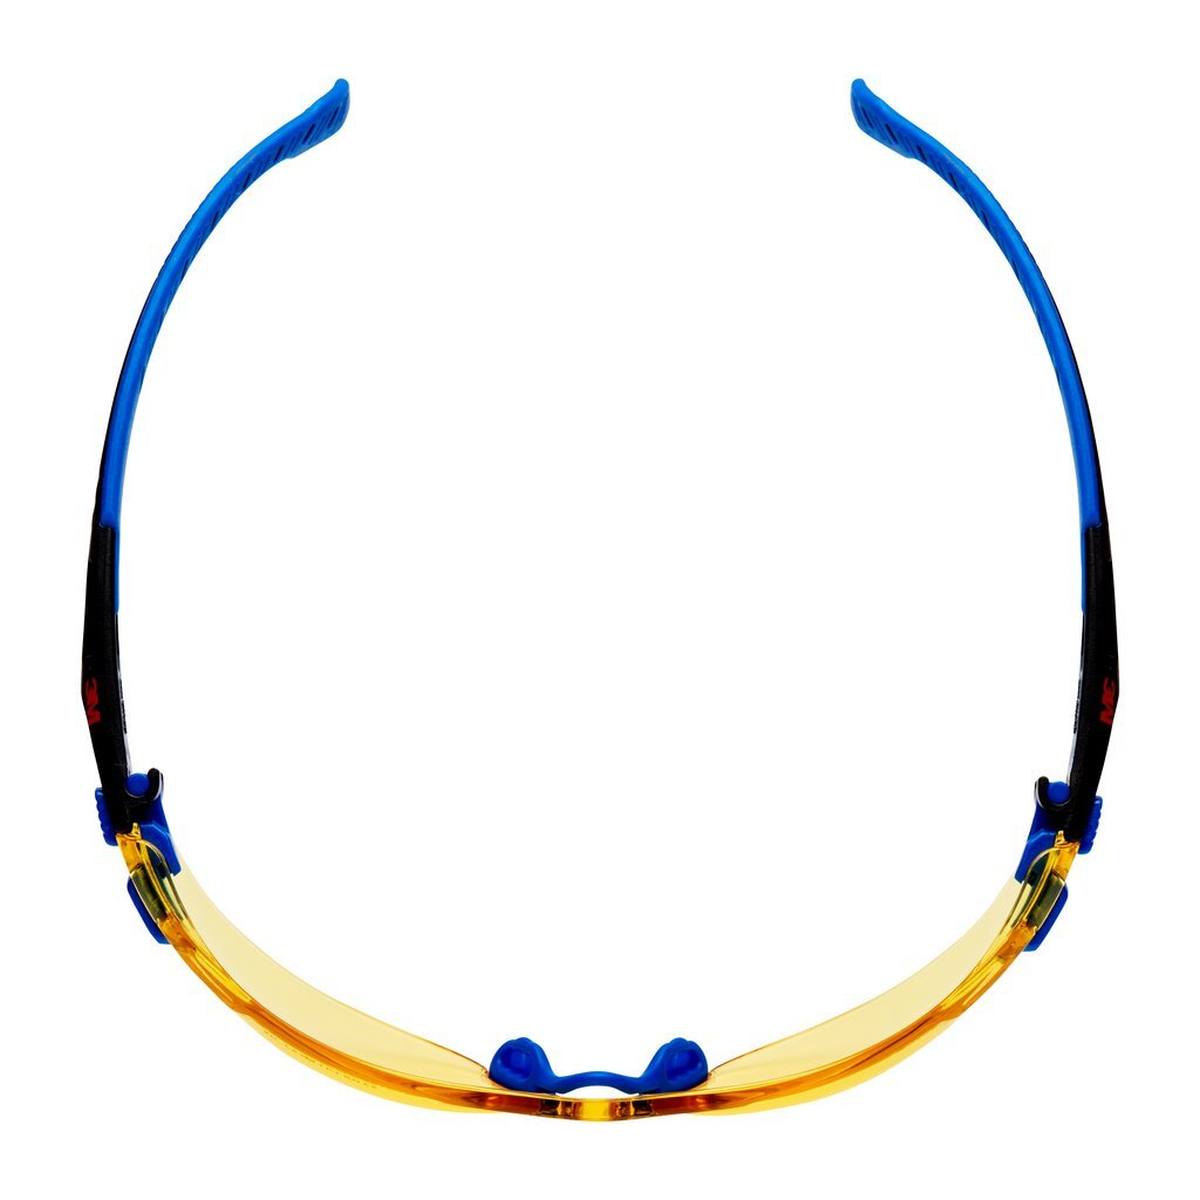 3M Solus 1000 safety spectacles, blue/black frame, Scotchgard anti-fog/anti-scratch coating (K&amp;N), yellow lens, S1103SGAF-EU